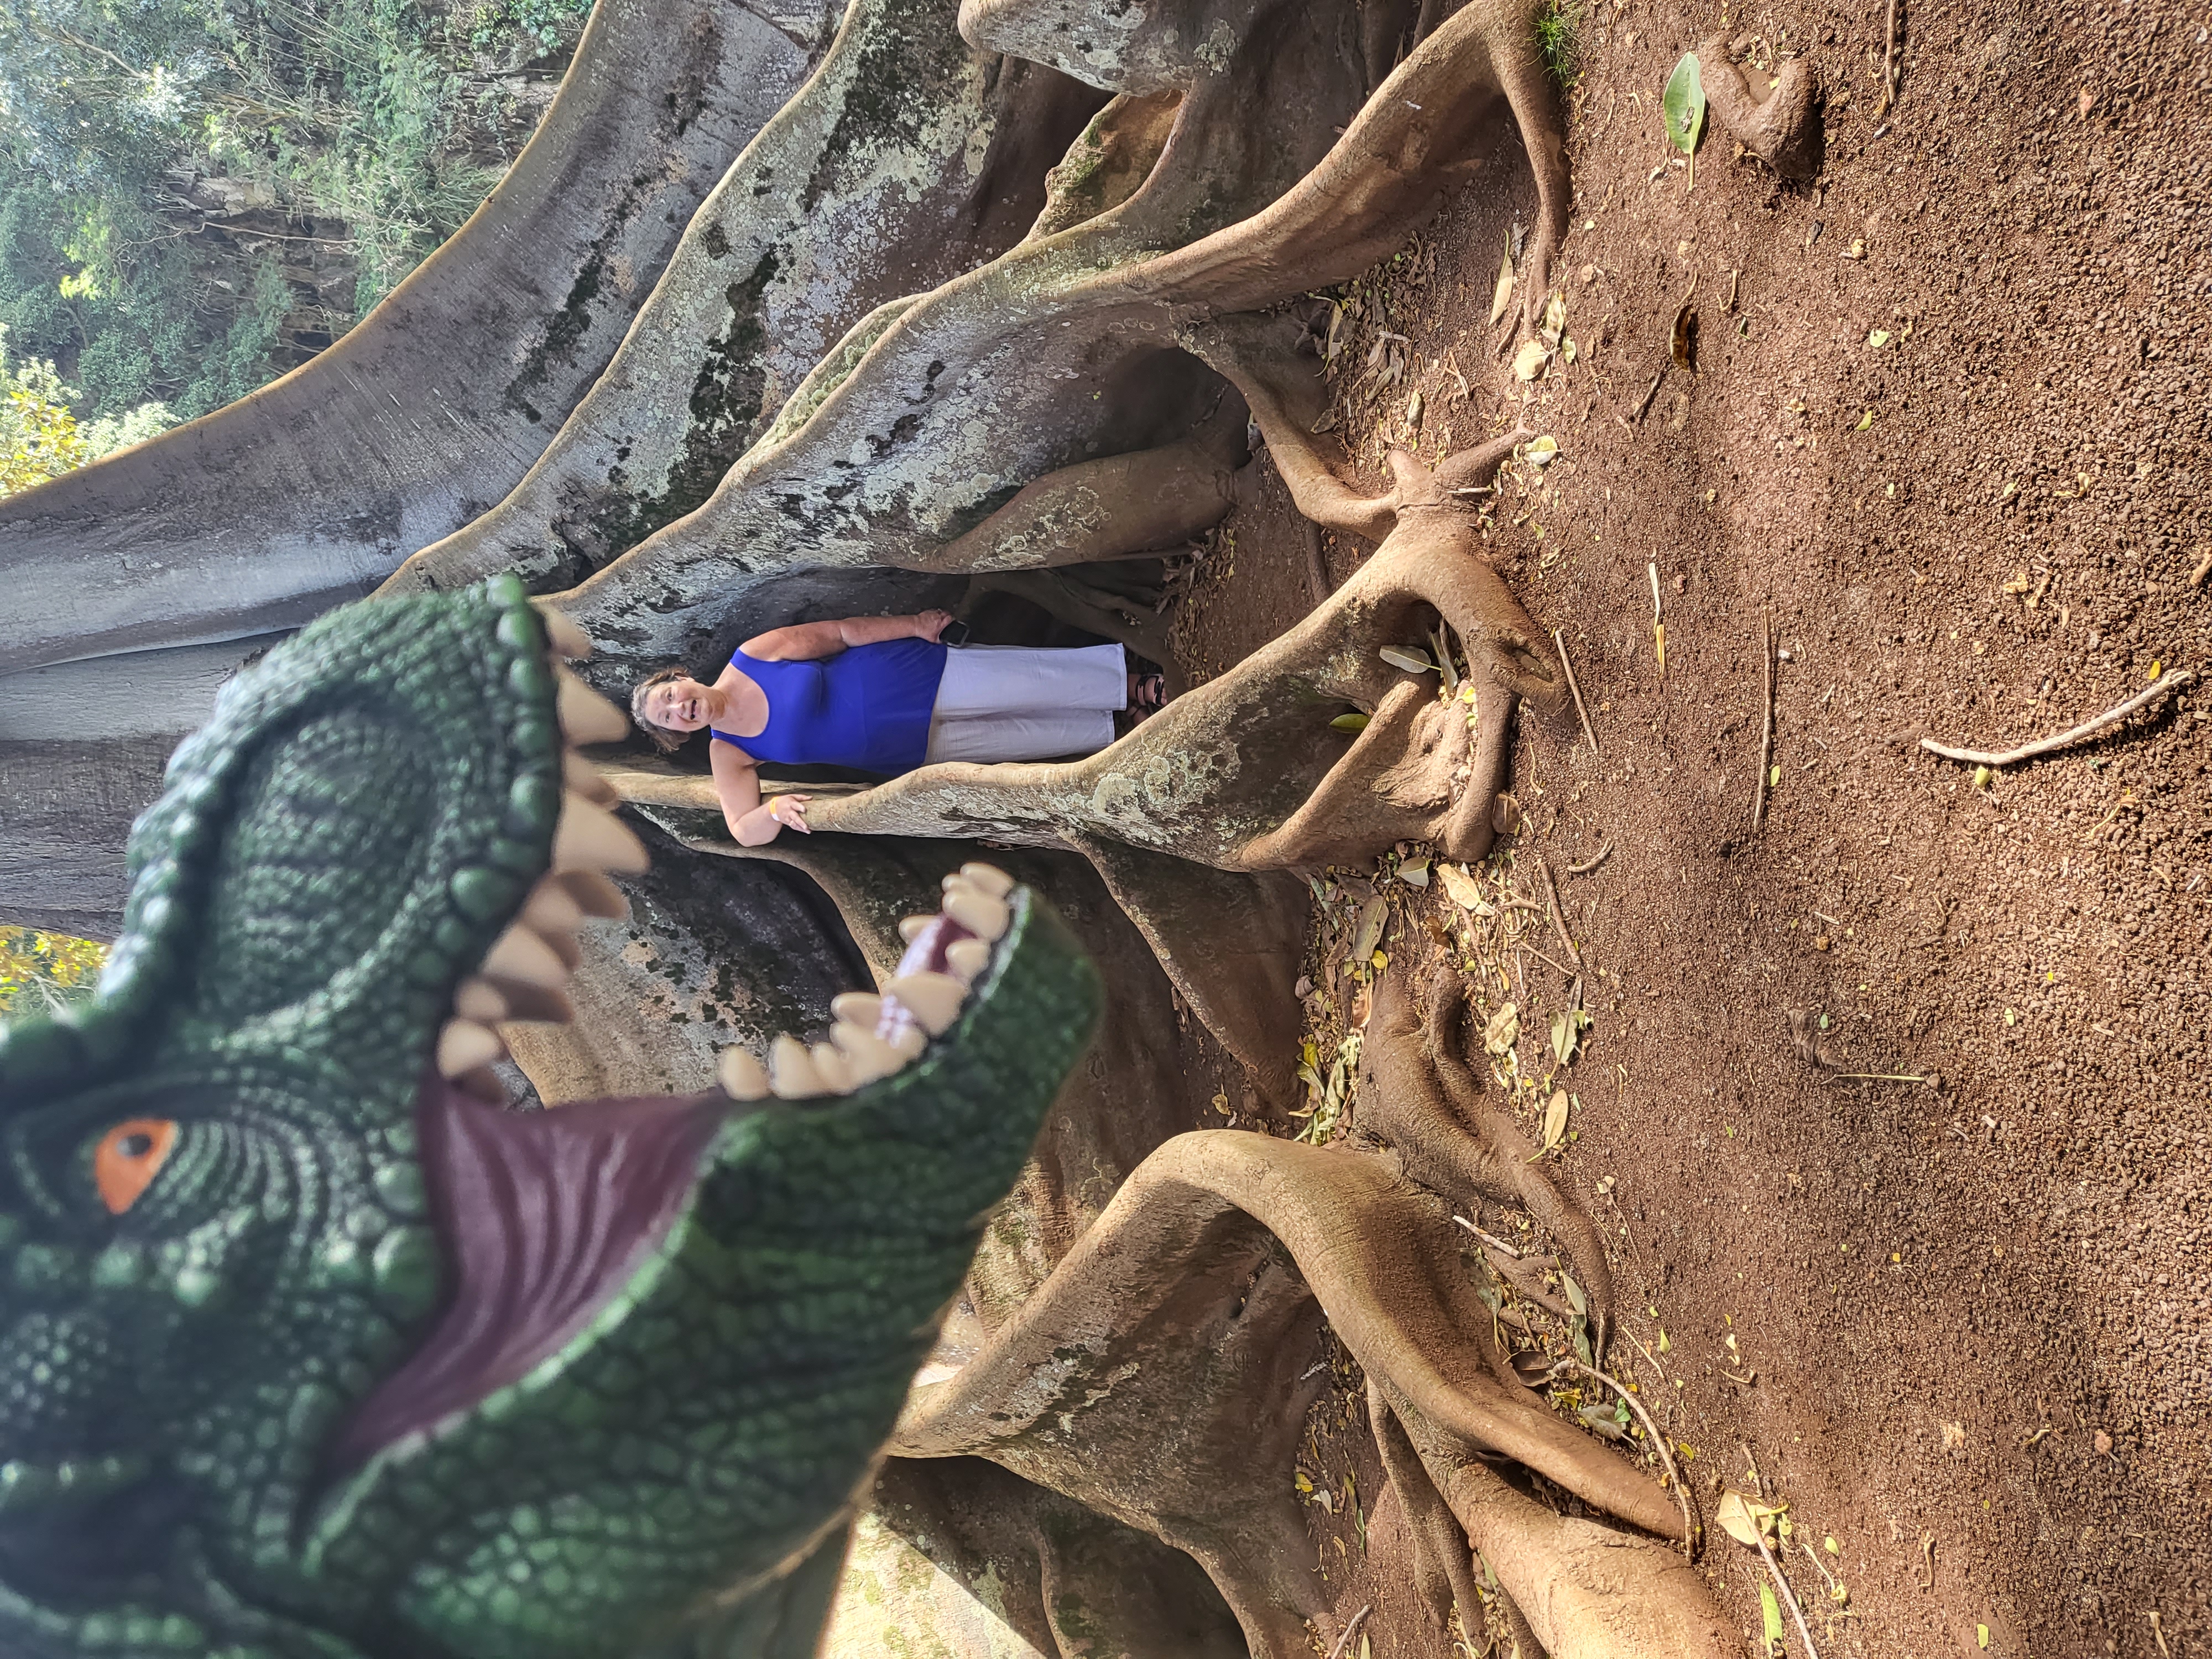 The author getting "eaten" by a plastic Tyrranosaurus Rex in the Allerton Gardens in Kauai.